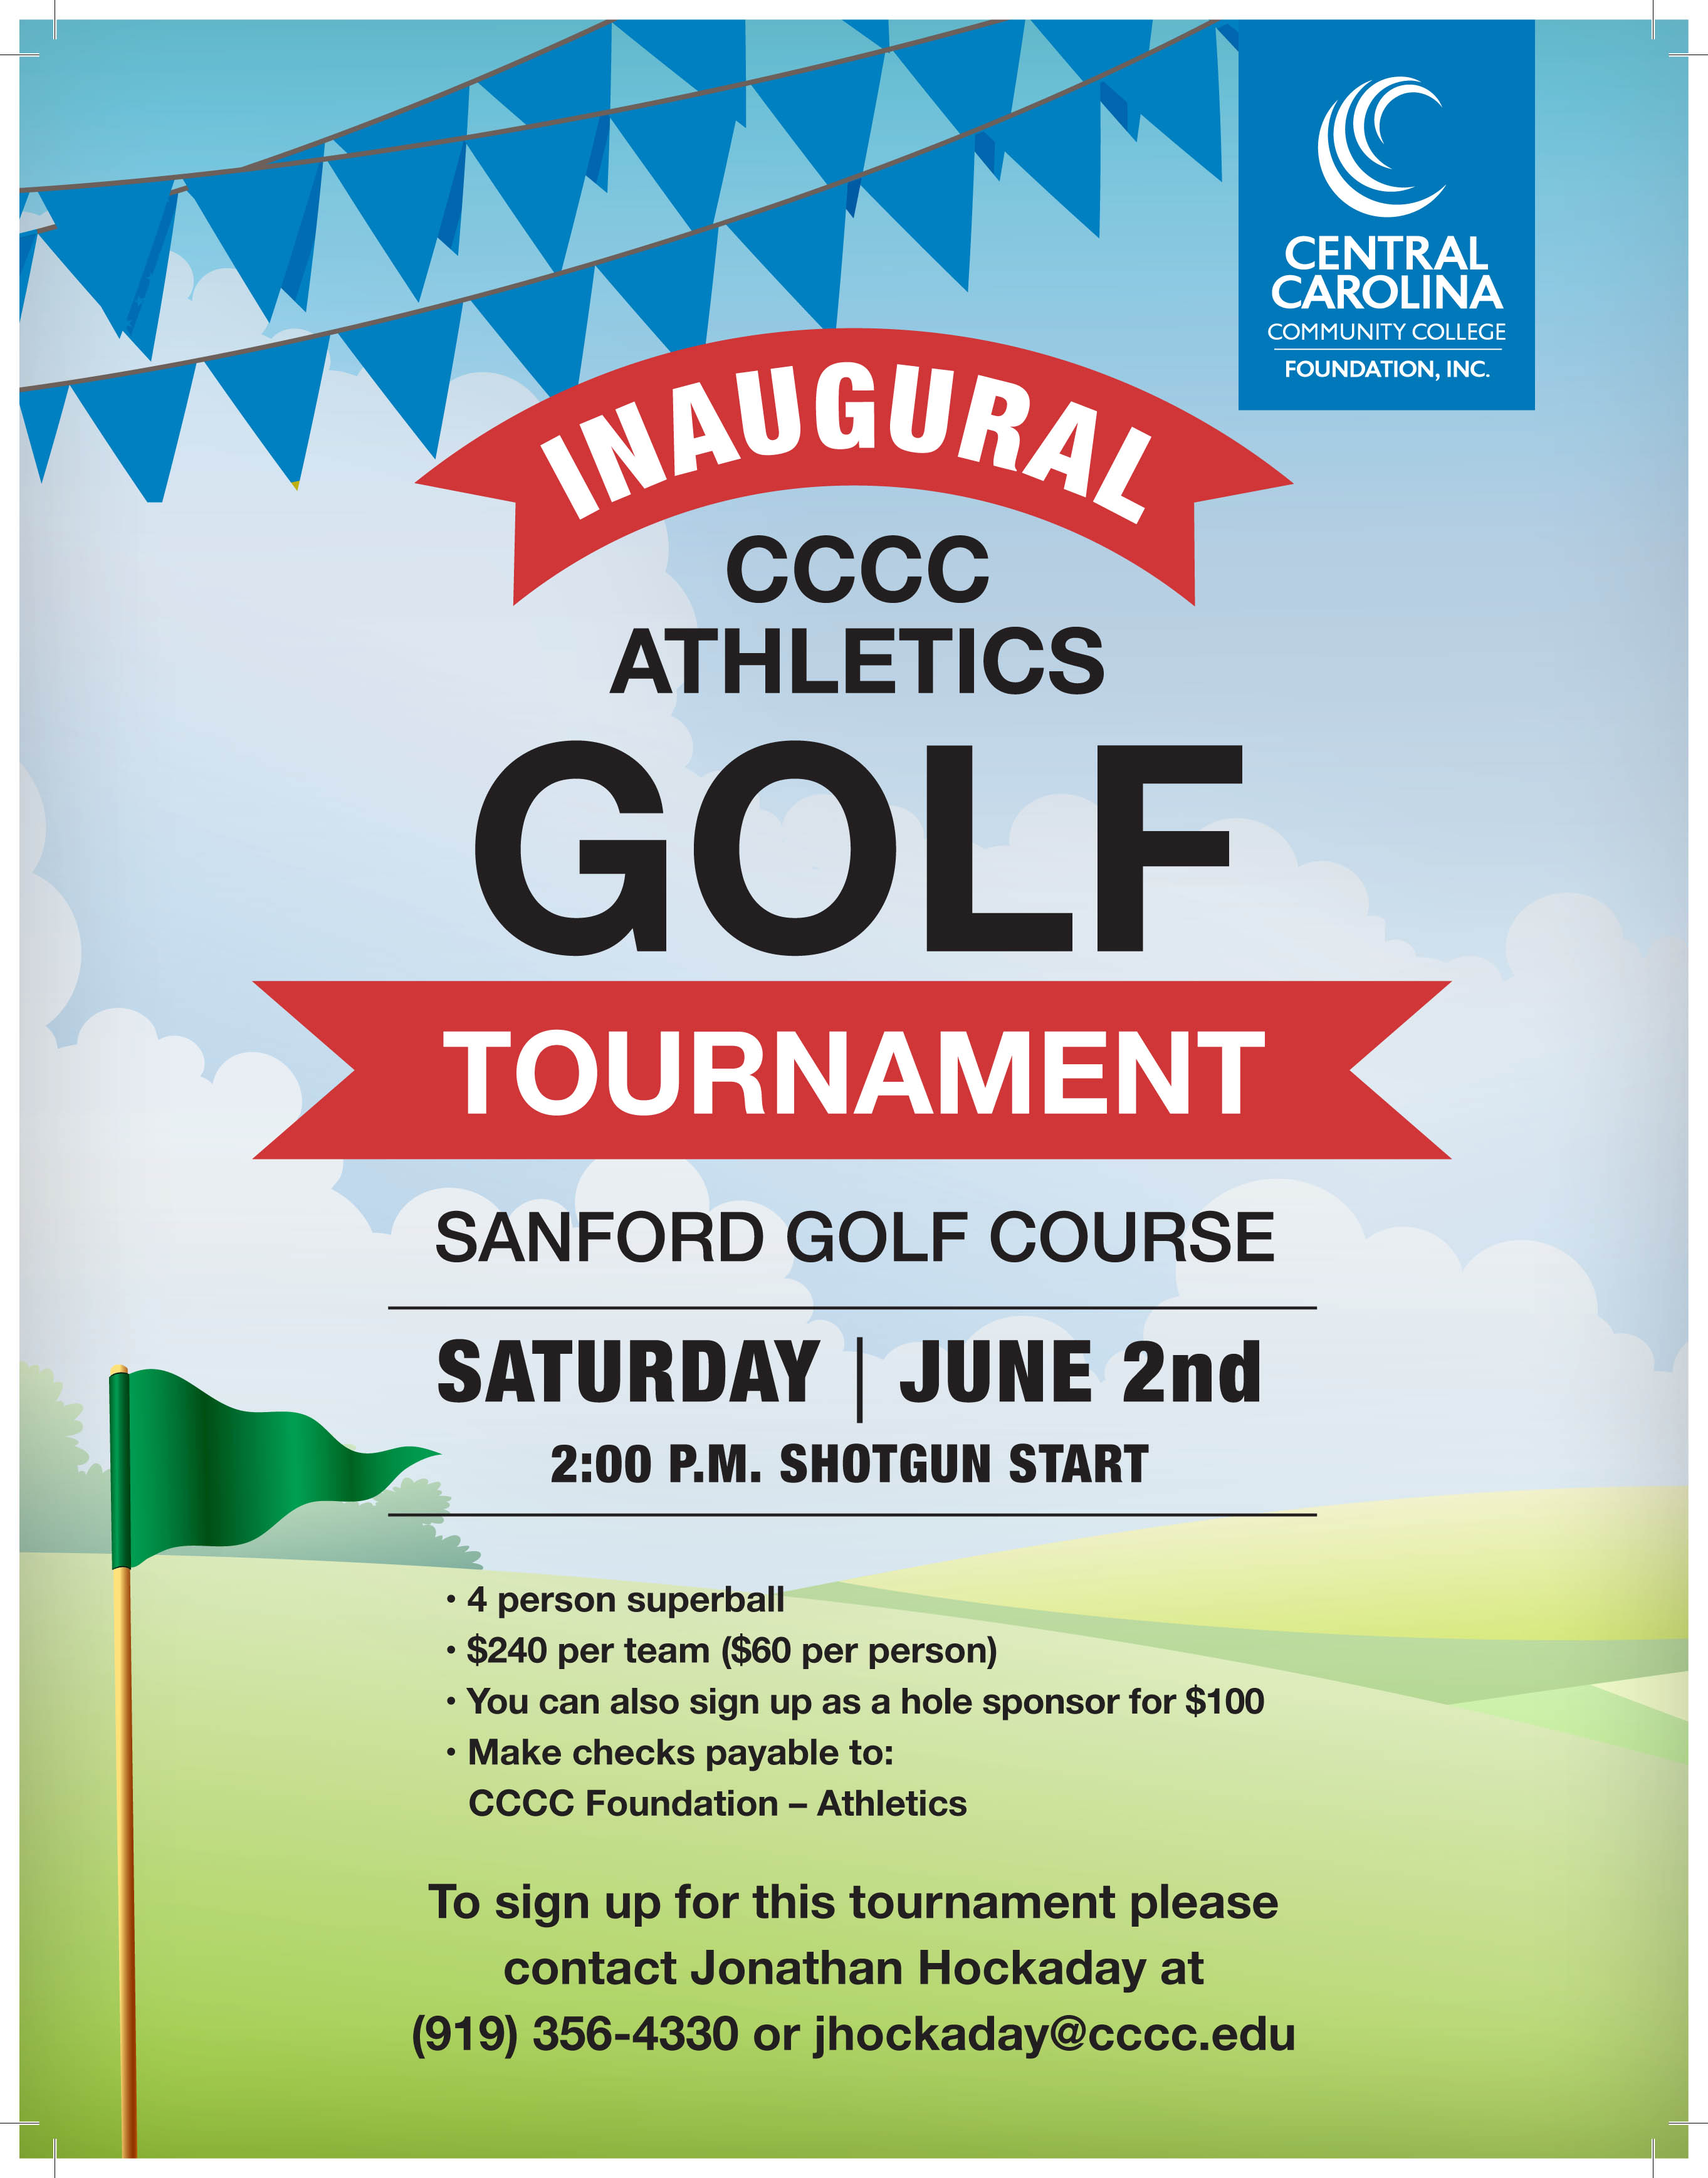 CCCC Athletics Golf Tournament set for June 2